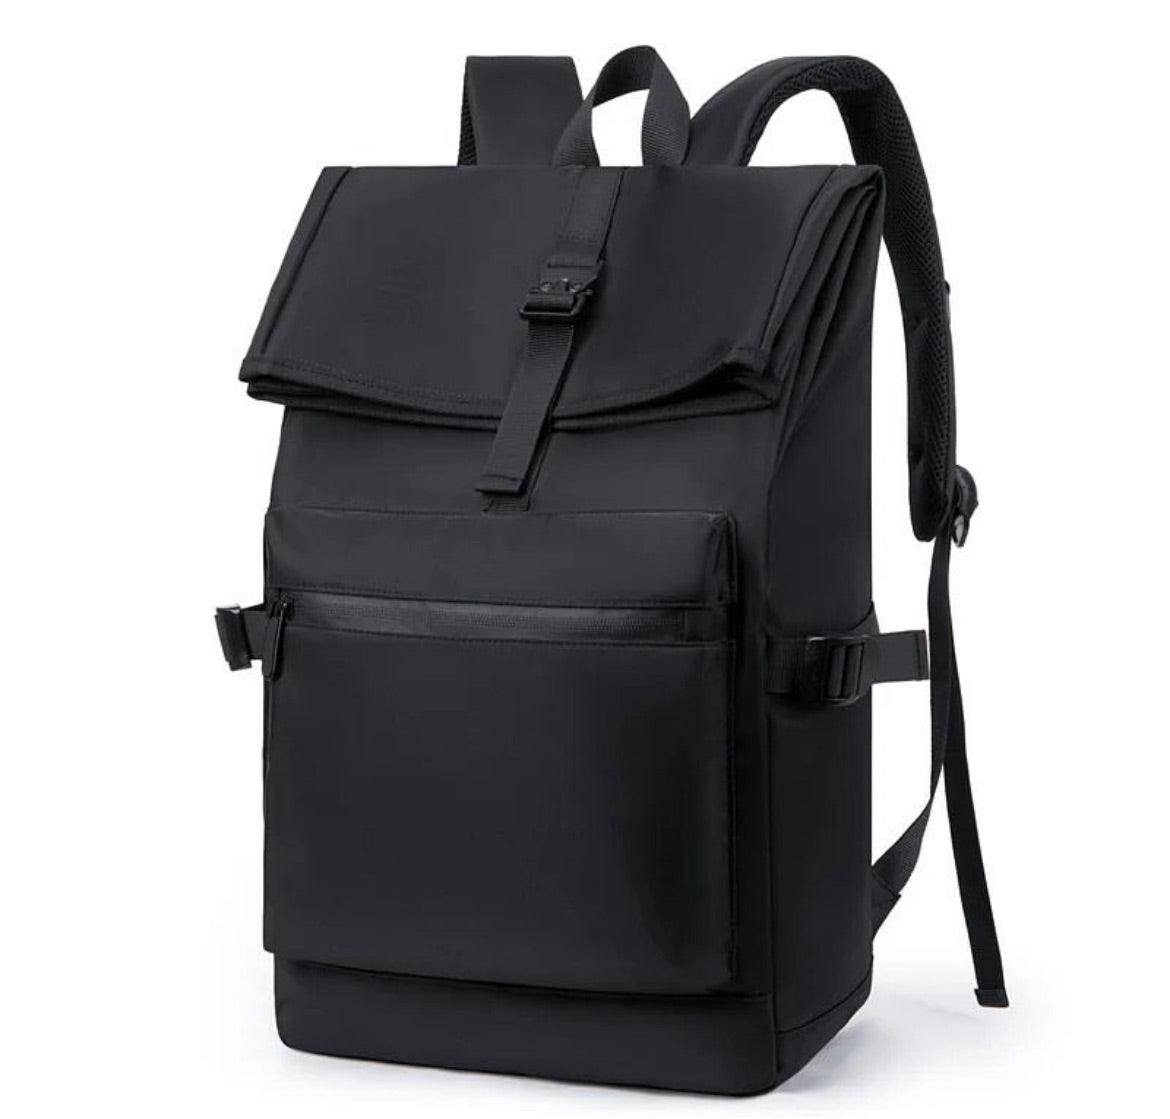 Waterproof durable school roll top rucksack bag